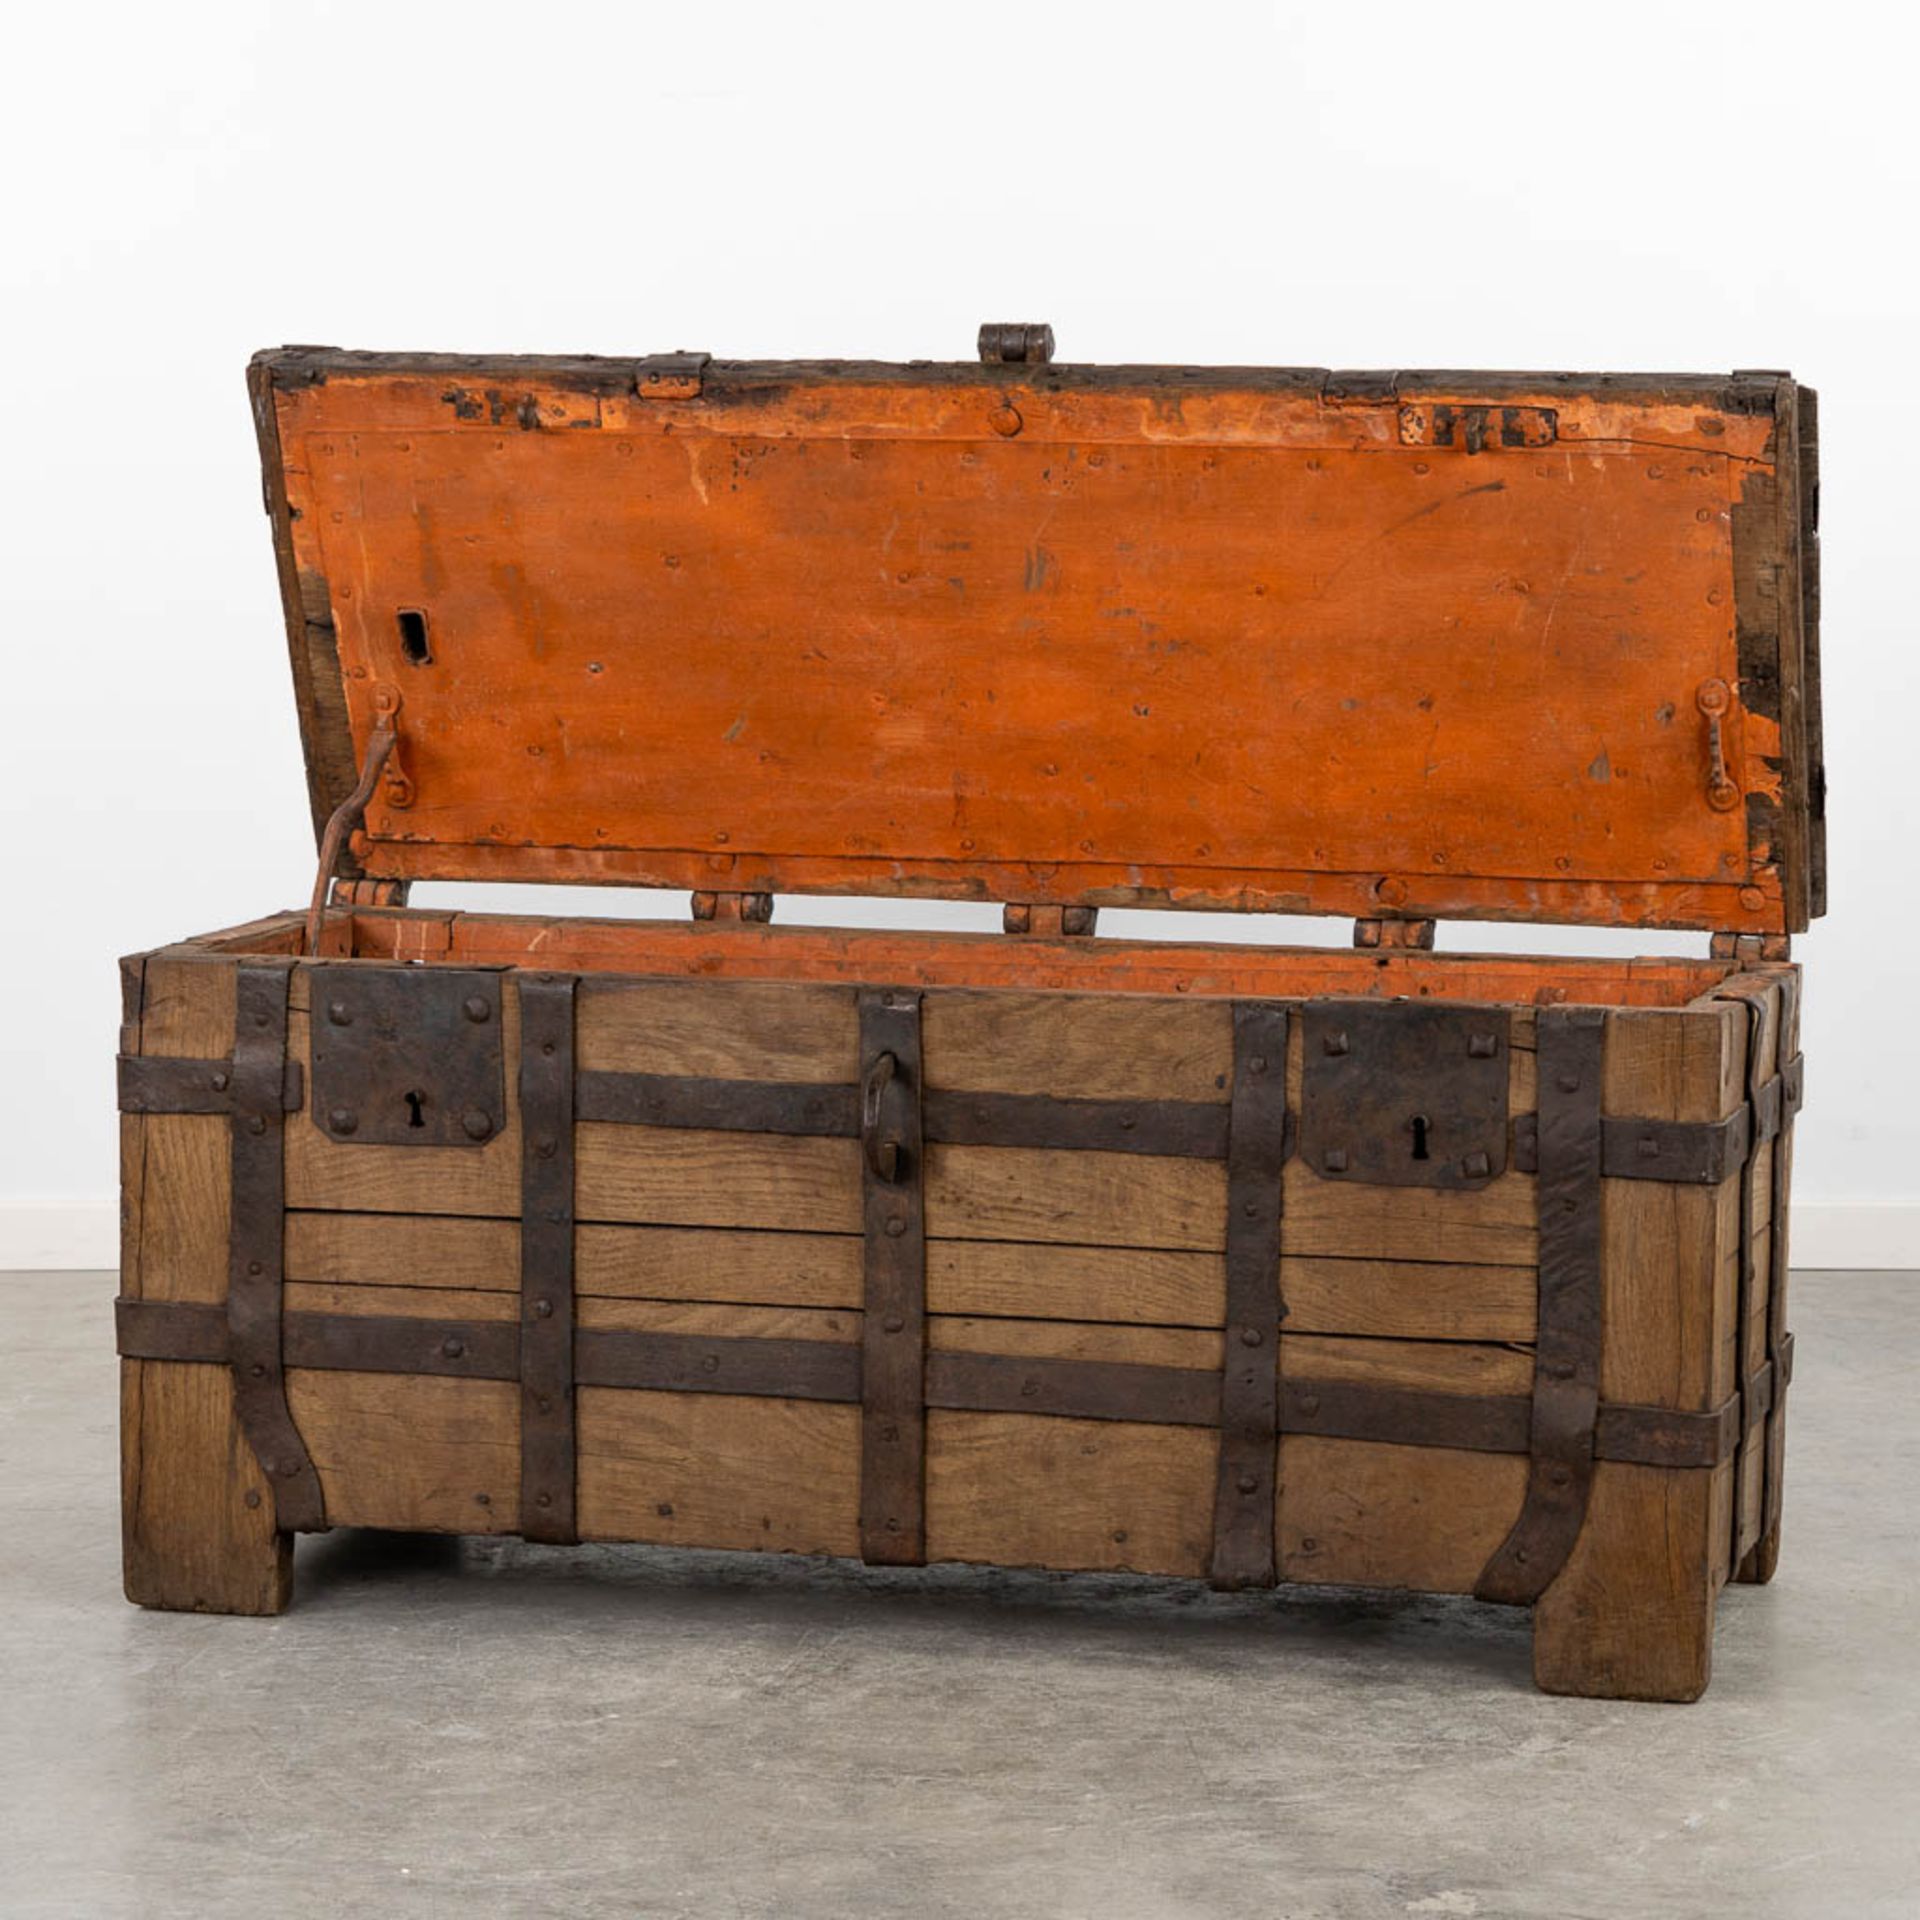 An antique 'Money Box' with metal hardware. 16th/17th C. (L:47 x W:126 x H:59 cm) - Bild 3 aus 13